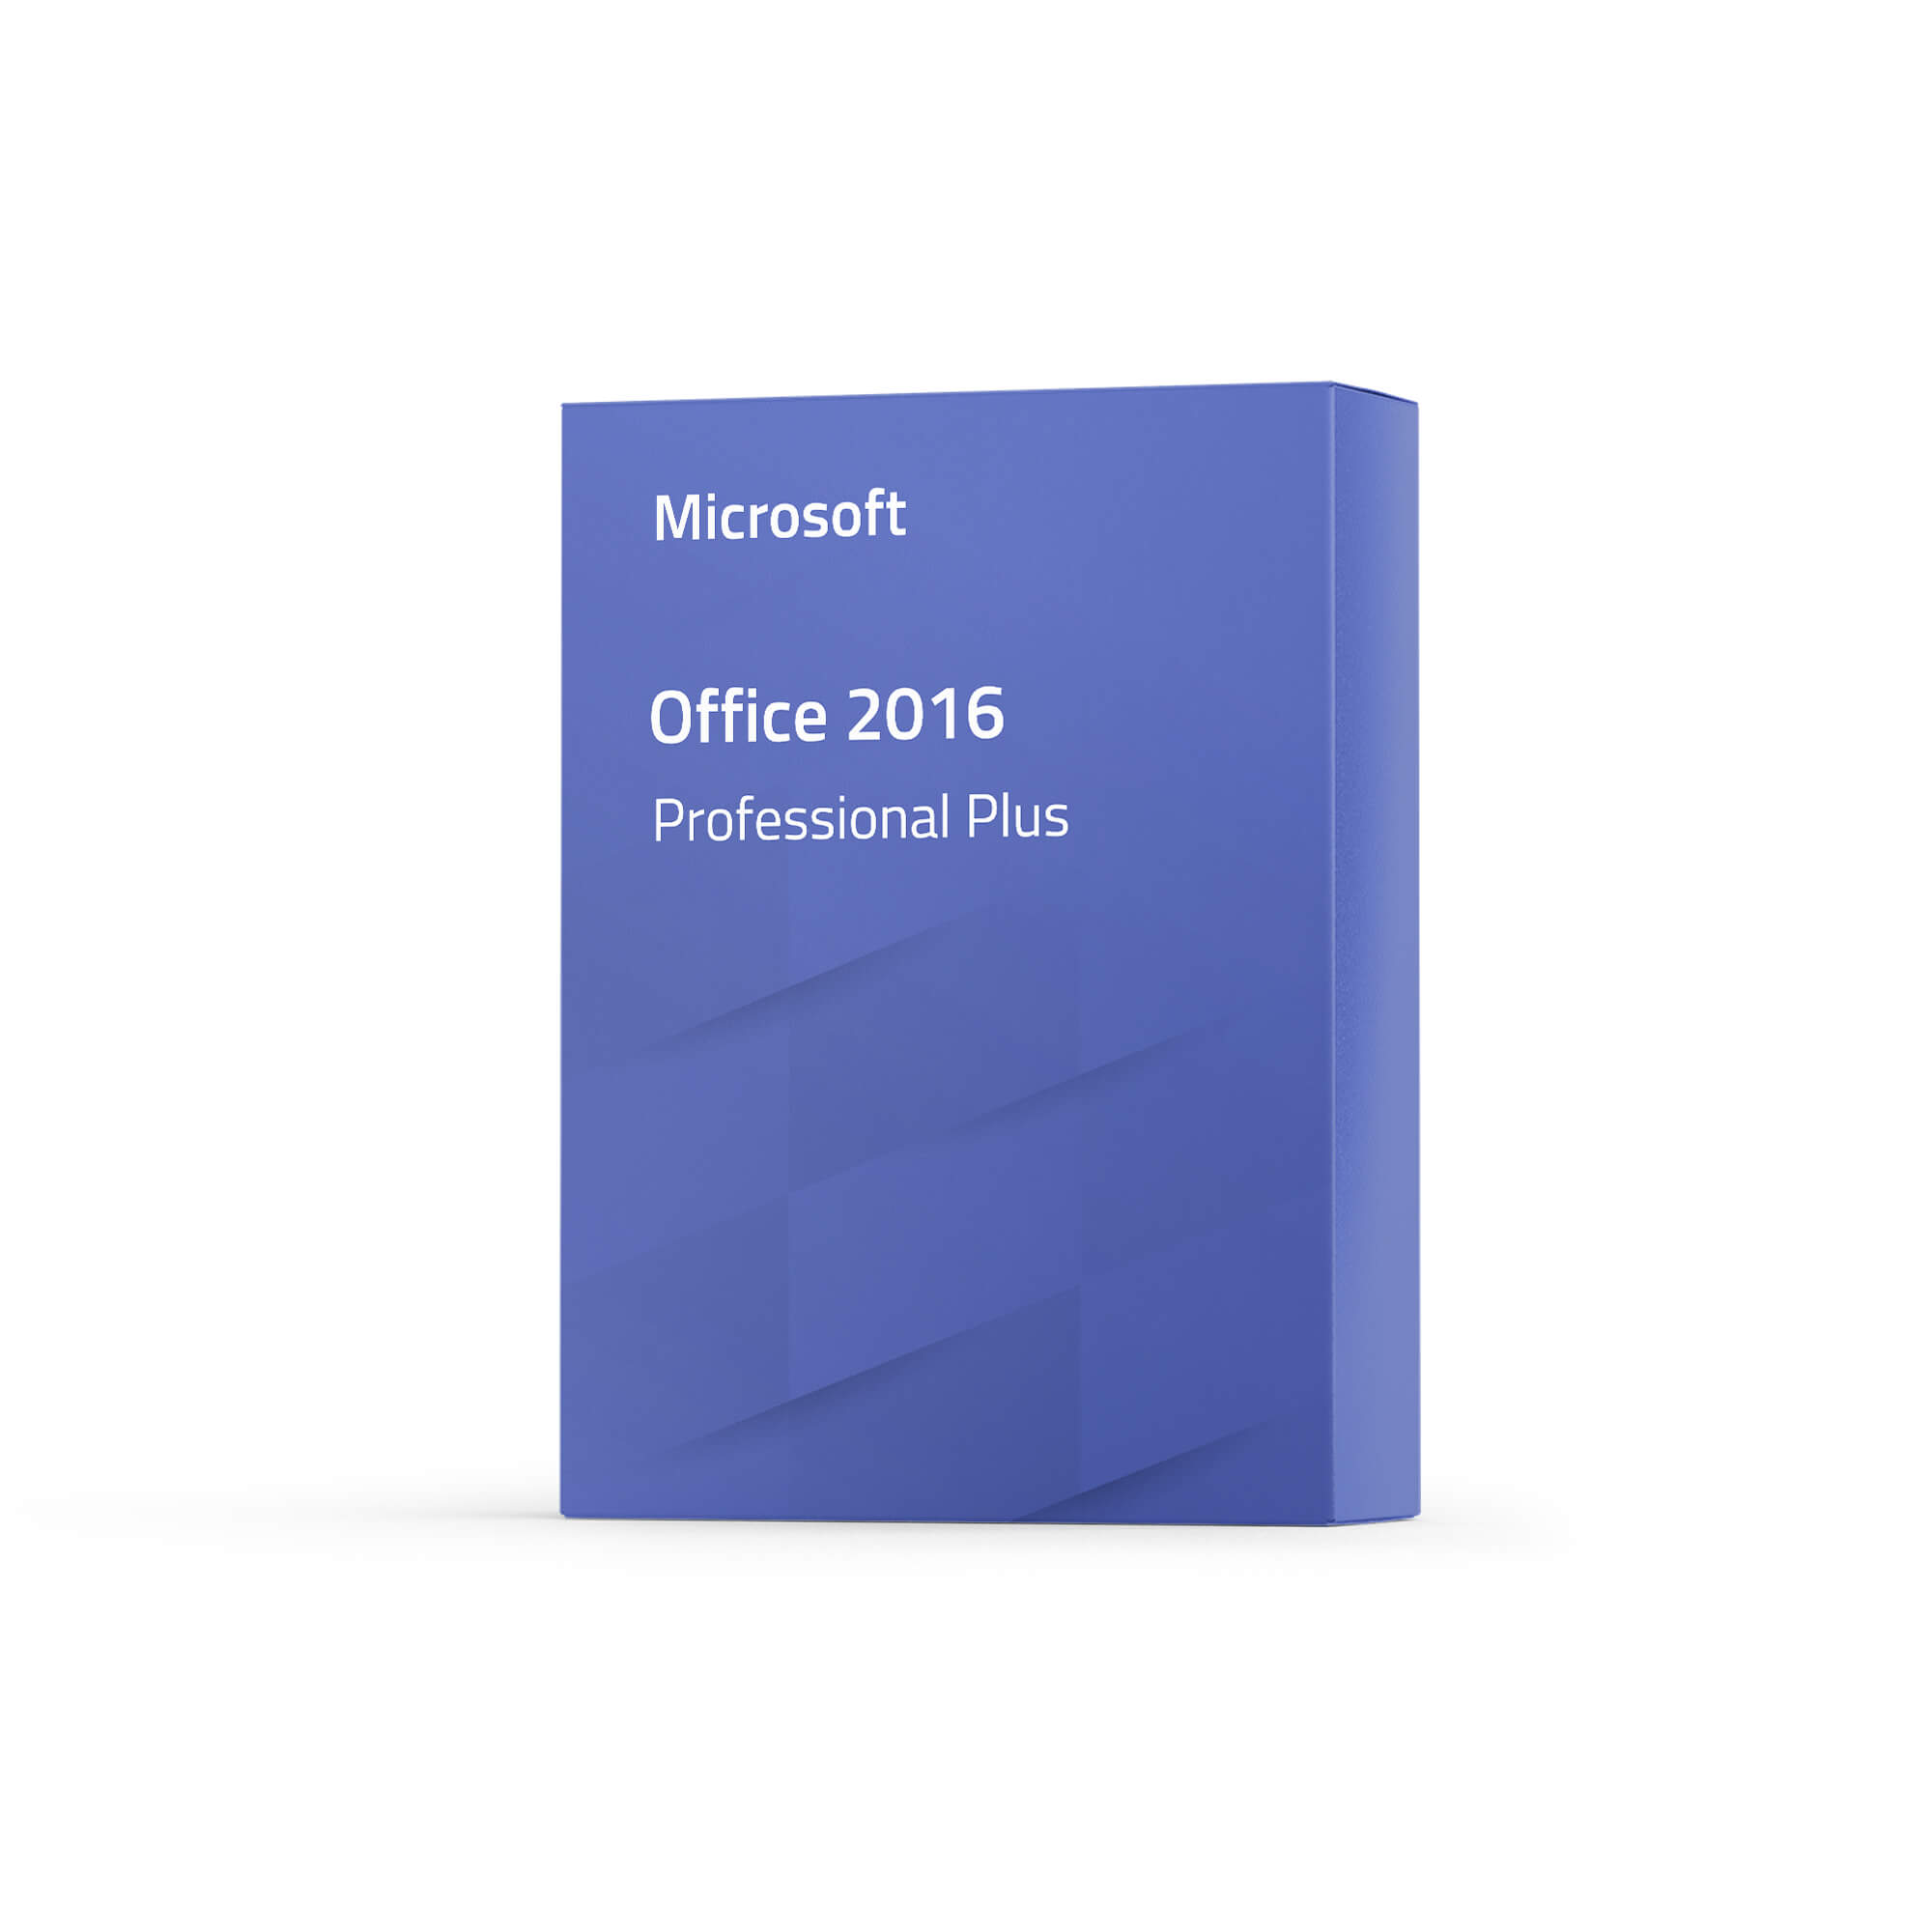 Microsoft Office Professional Plus 2016 Tmdigital 0270